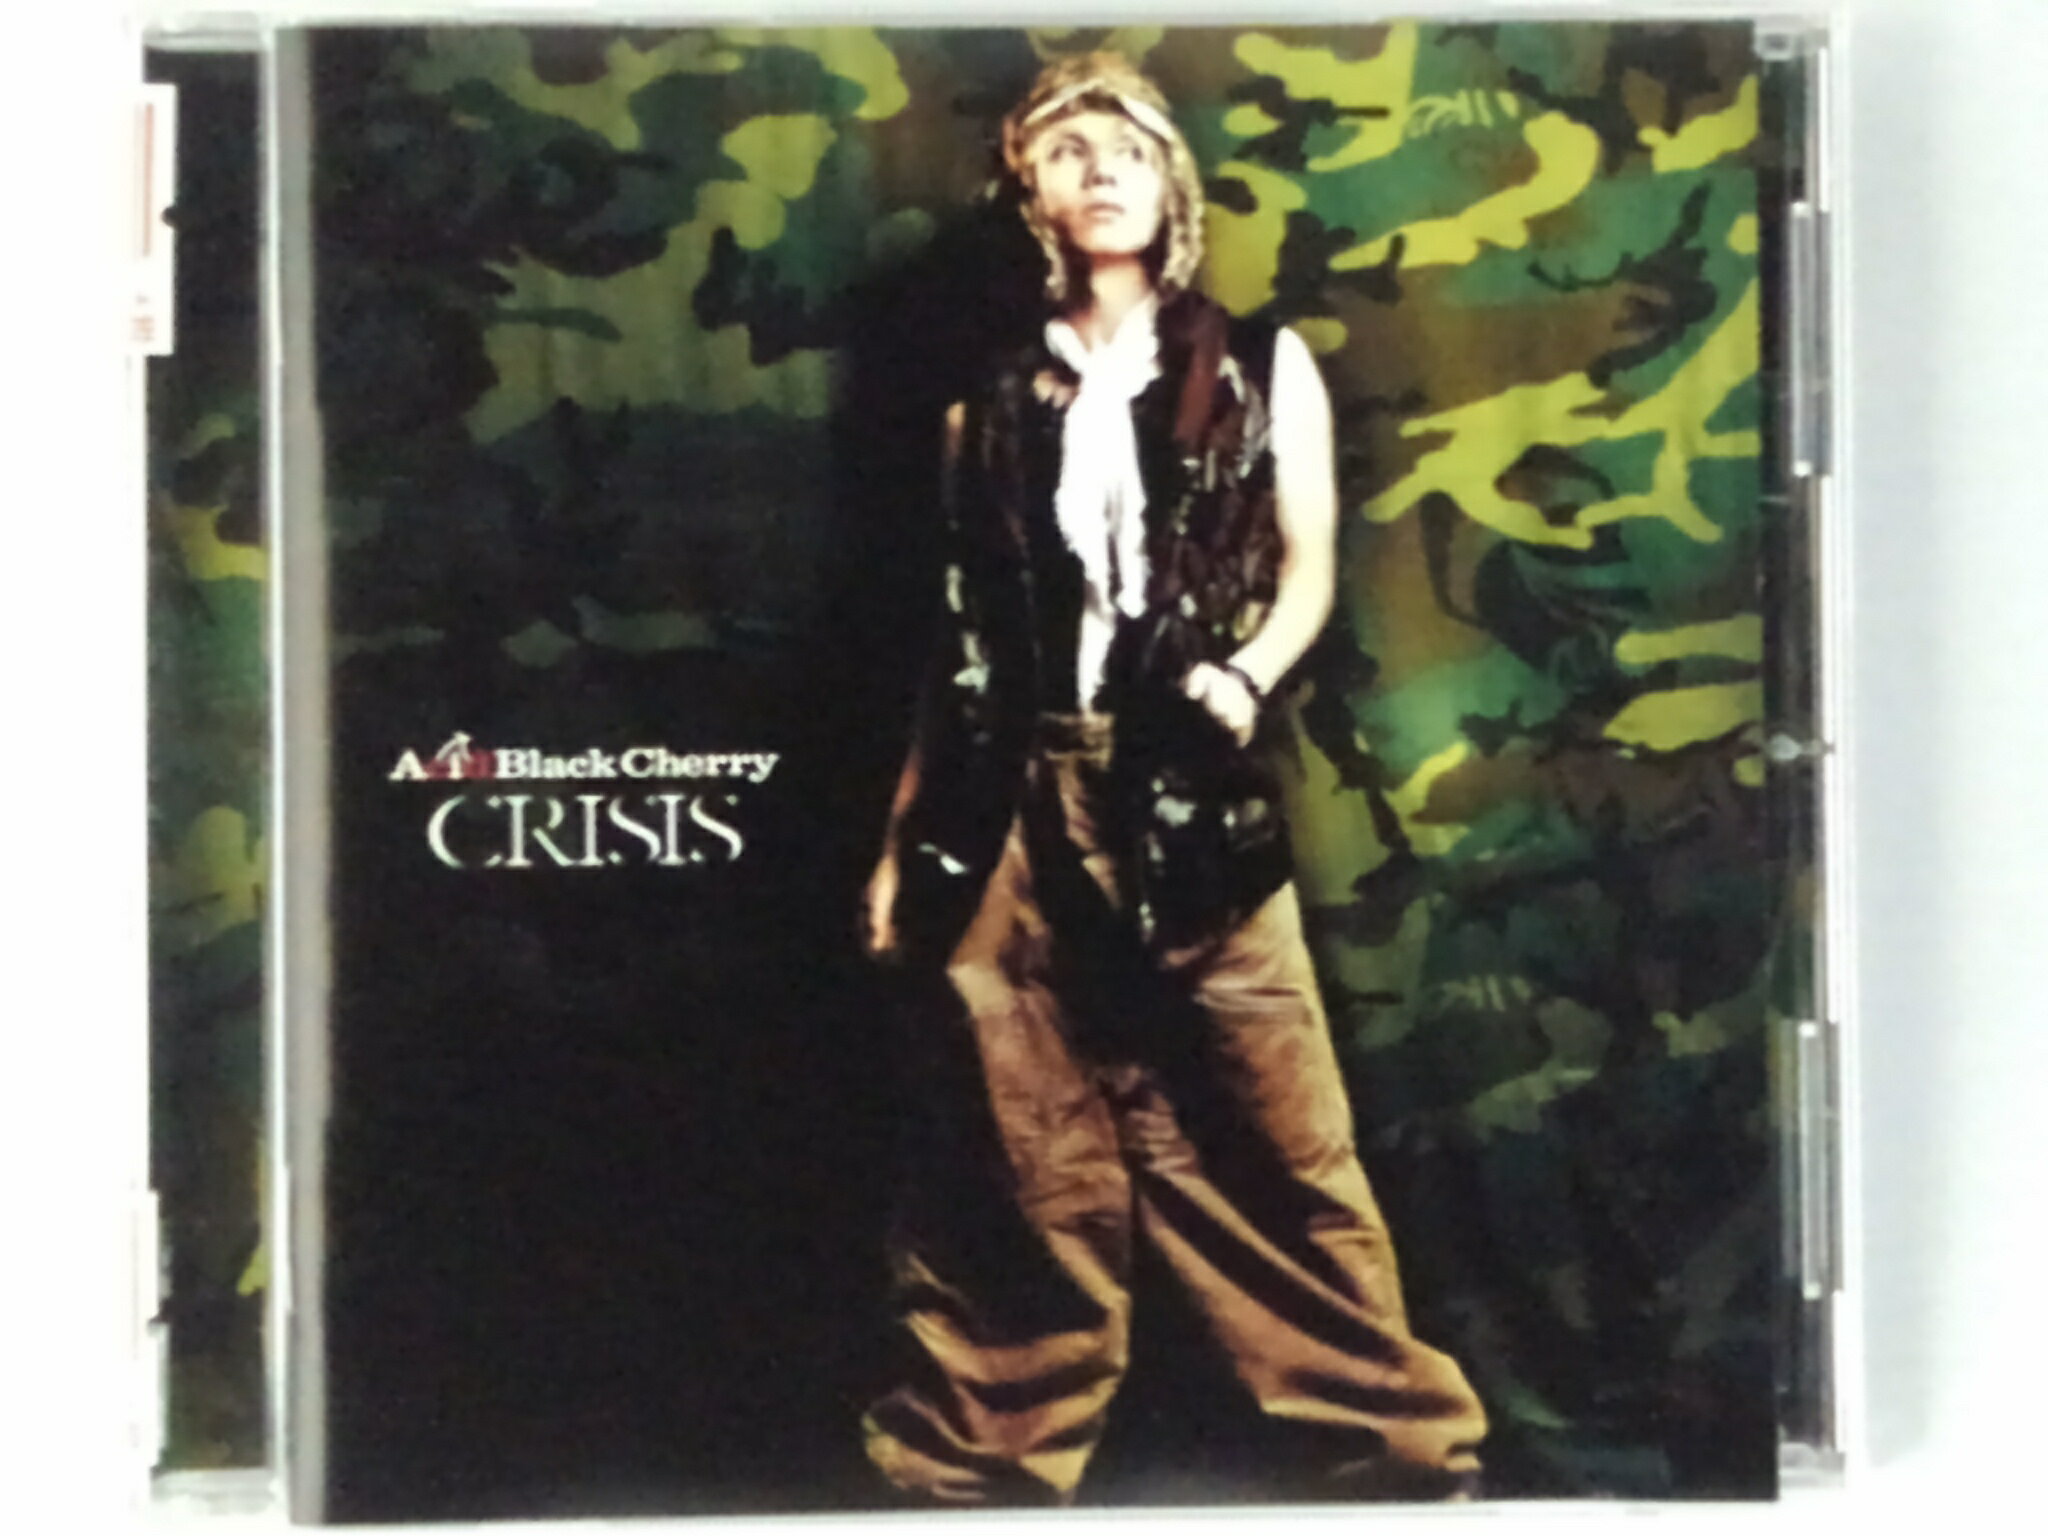 ZC74649【中古】【CD】CRISIS/Acid Black Cherry